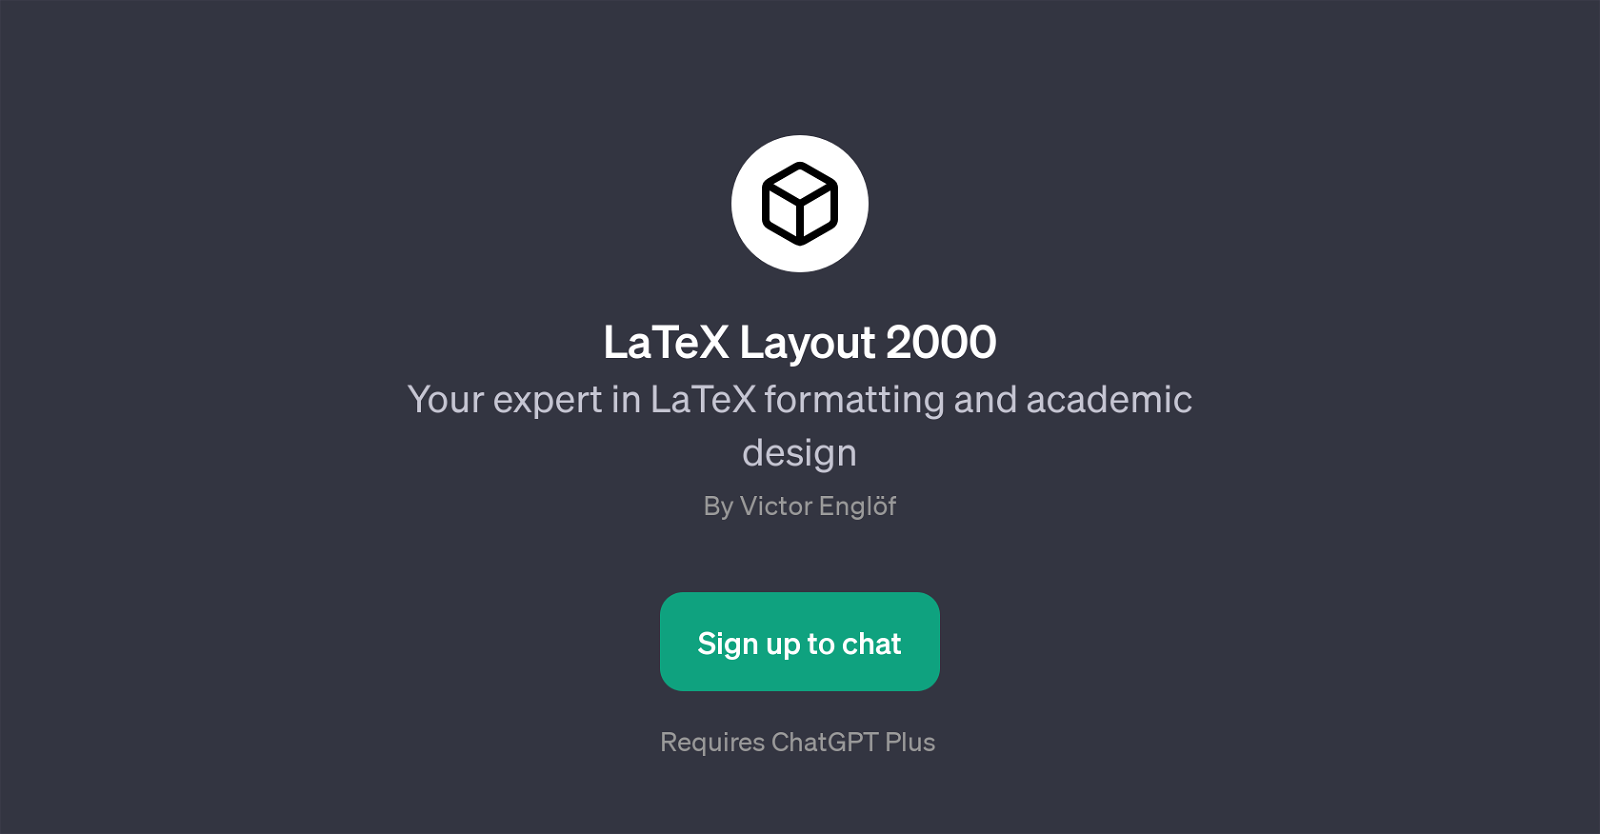 LaTeX Layout 2000 website